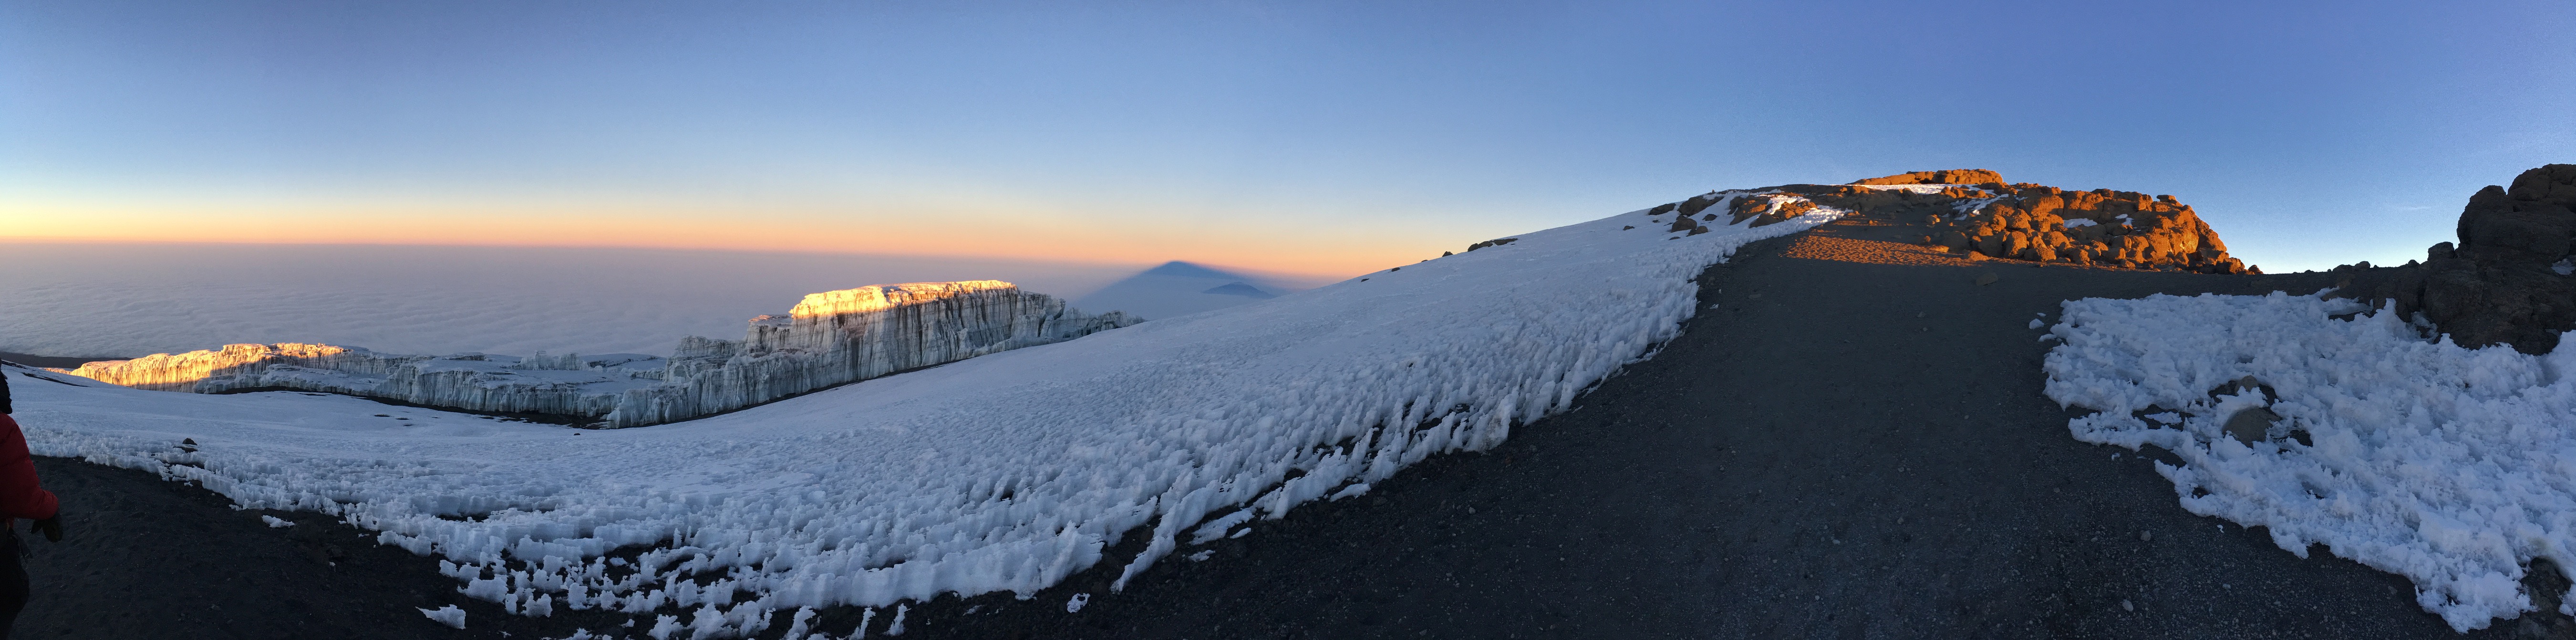 Photo of the summit of Mount Kilimanjaro at sunrise. Photo by the author.